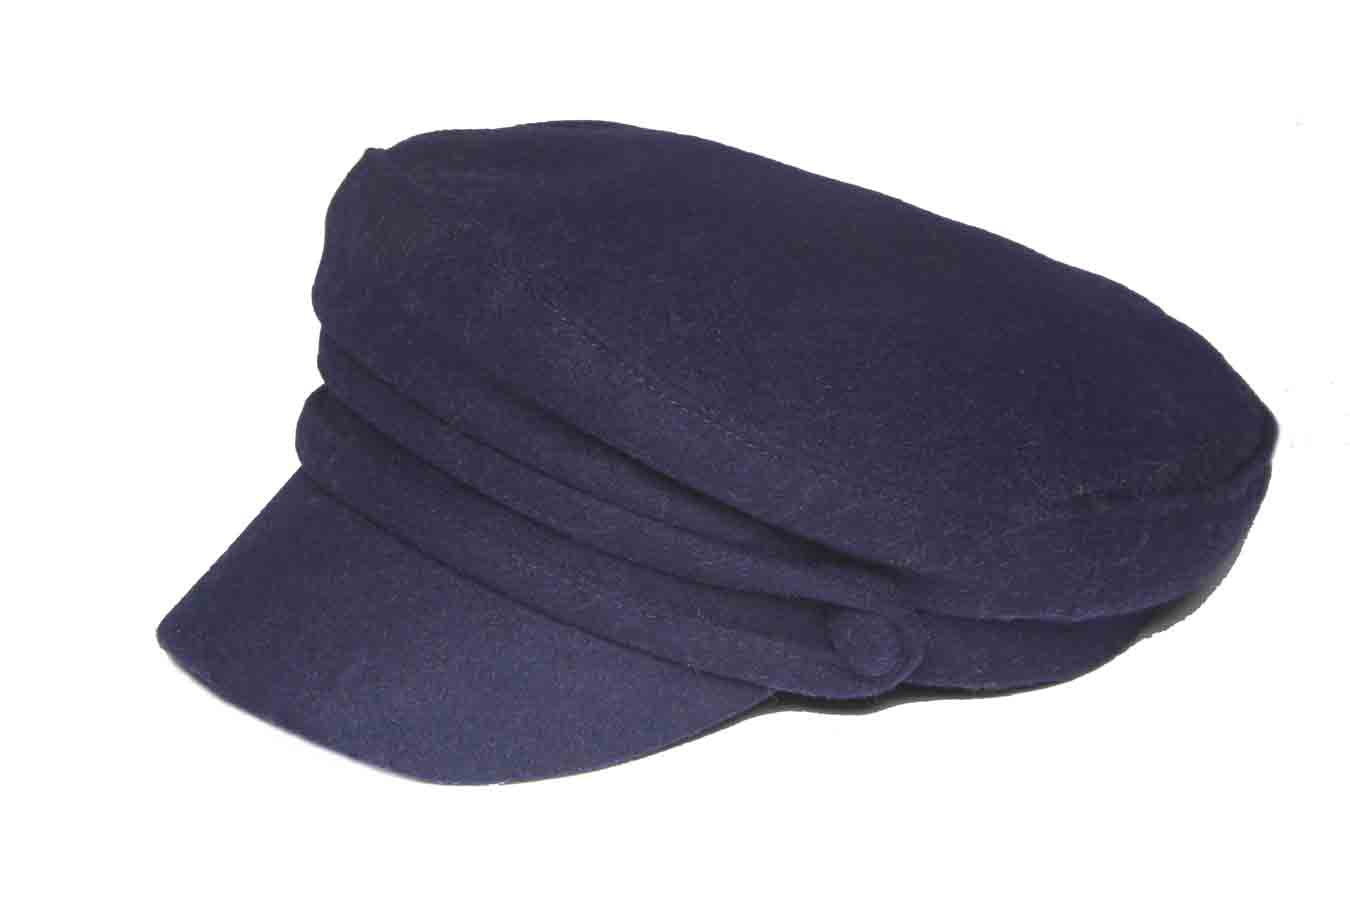 Zara Green Fisherman's Hat Cap Navy Blue Wool Blend Men's Size Small